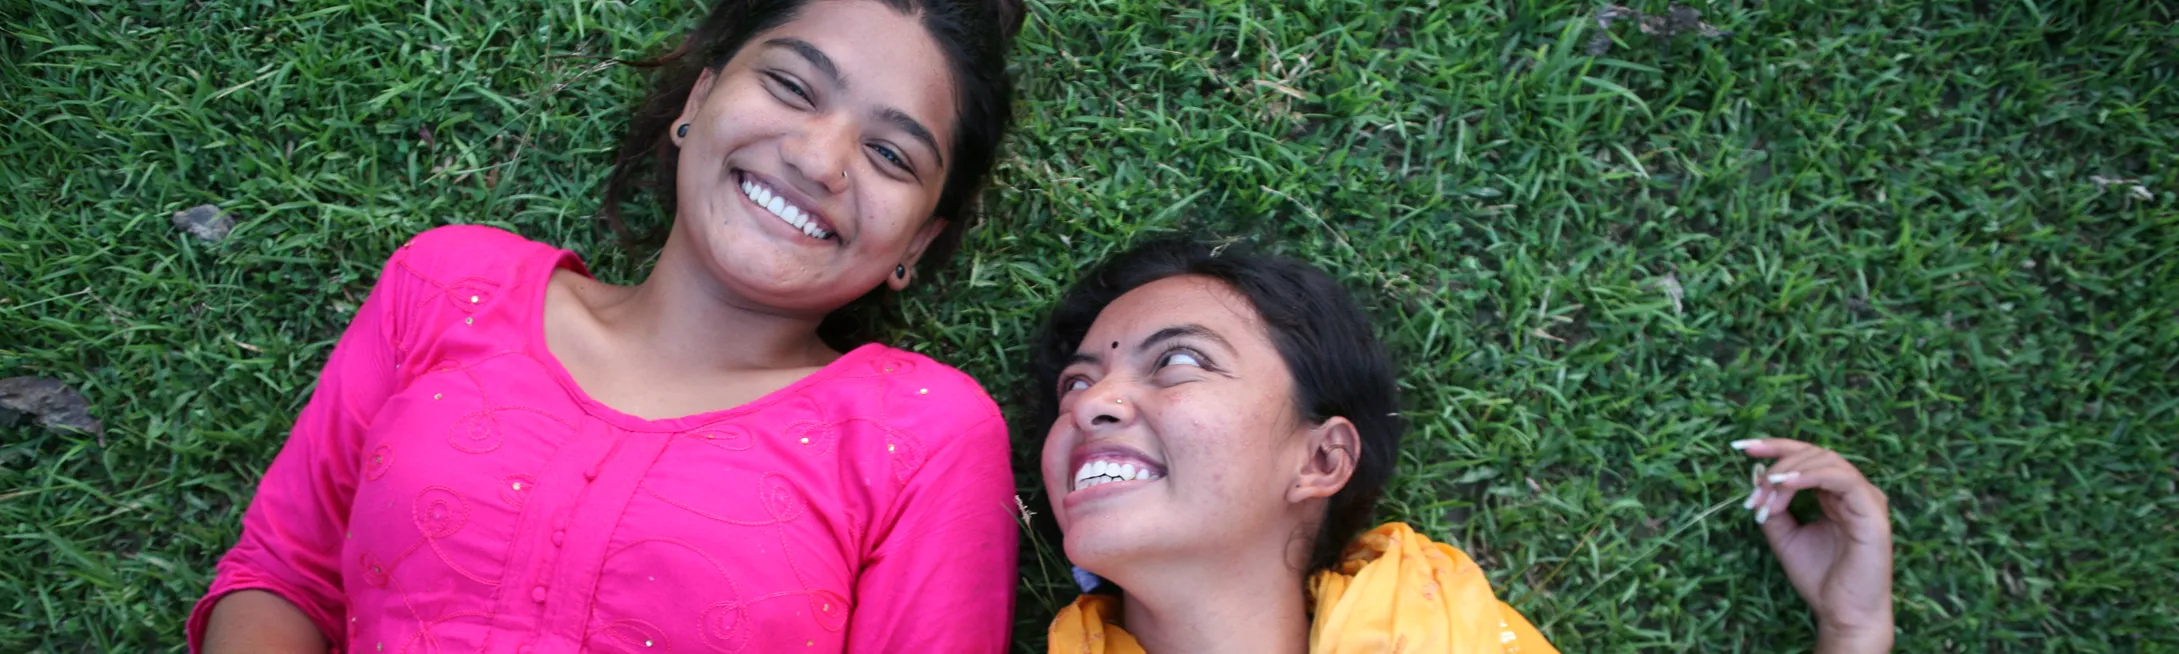 Meet Diksha from Nepal | She Creates Change - Room to Read